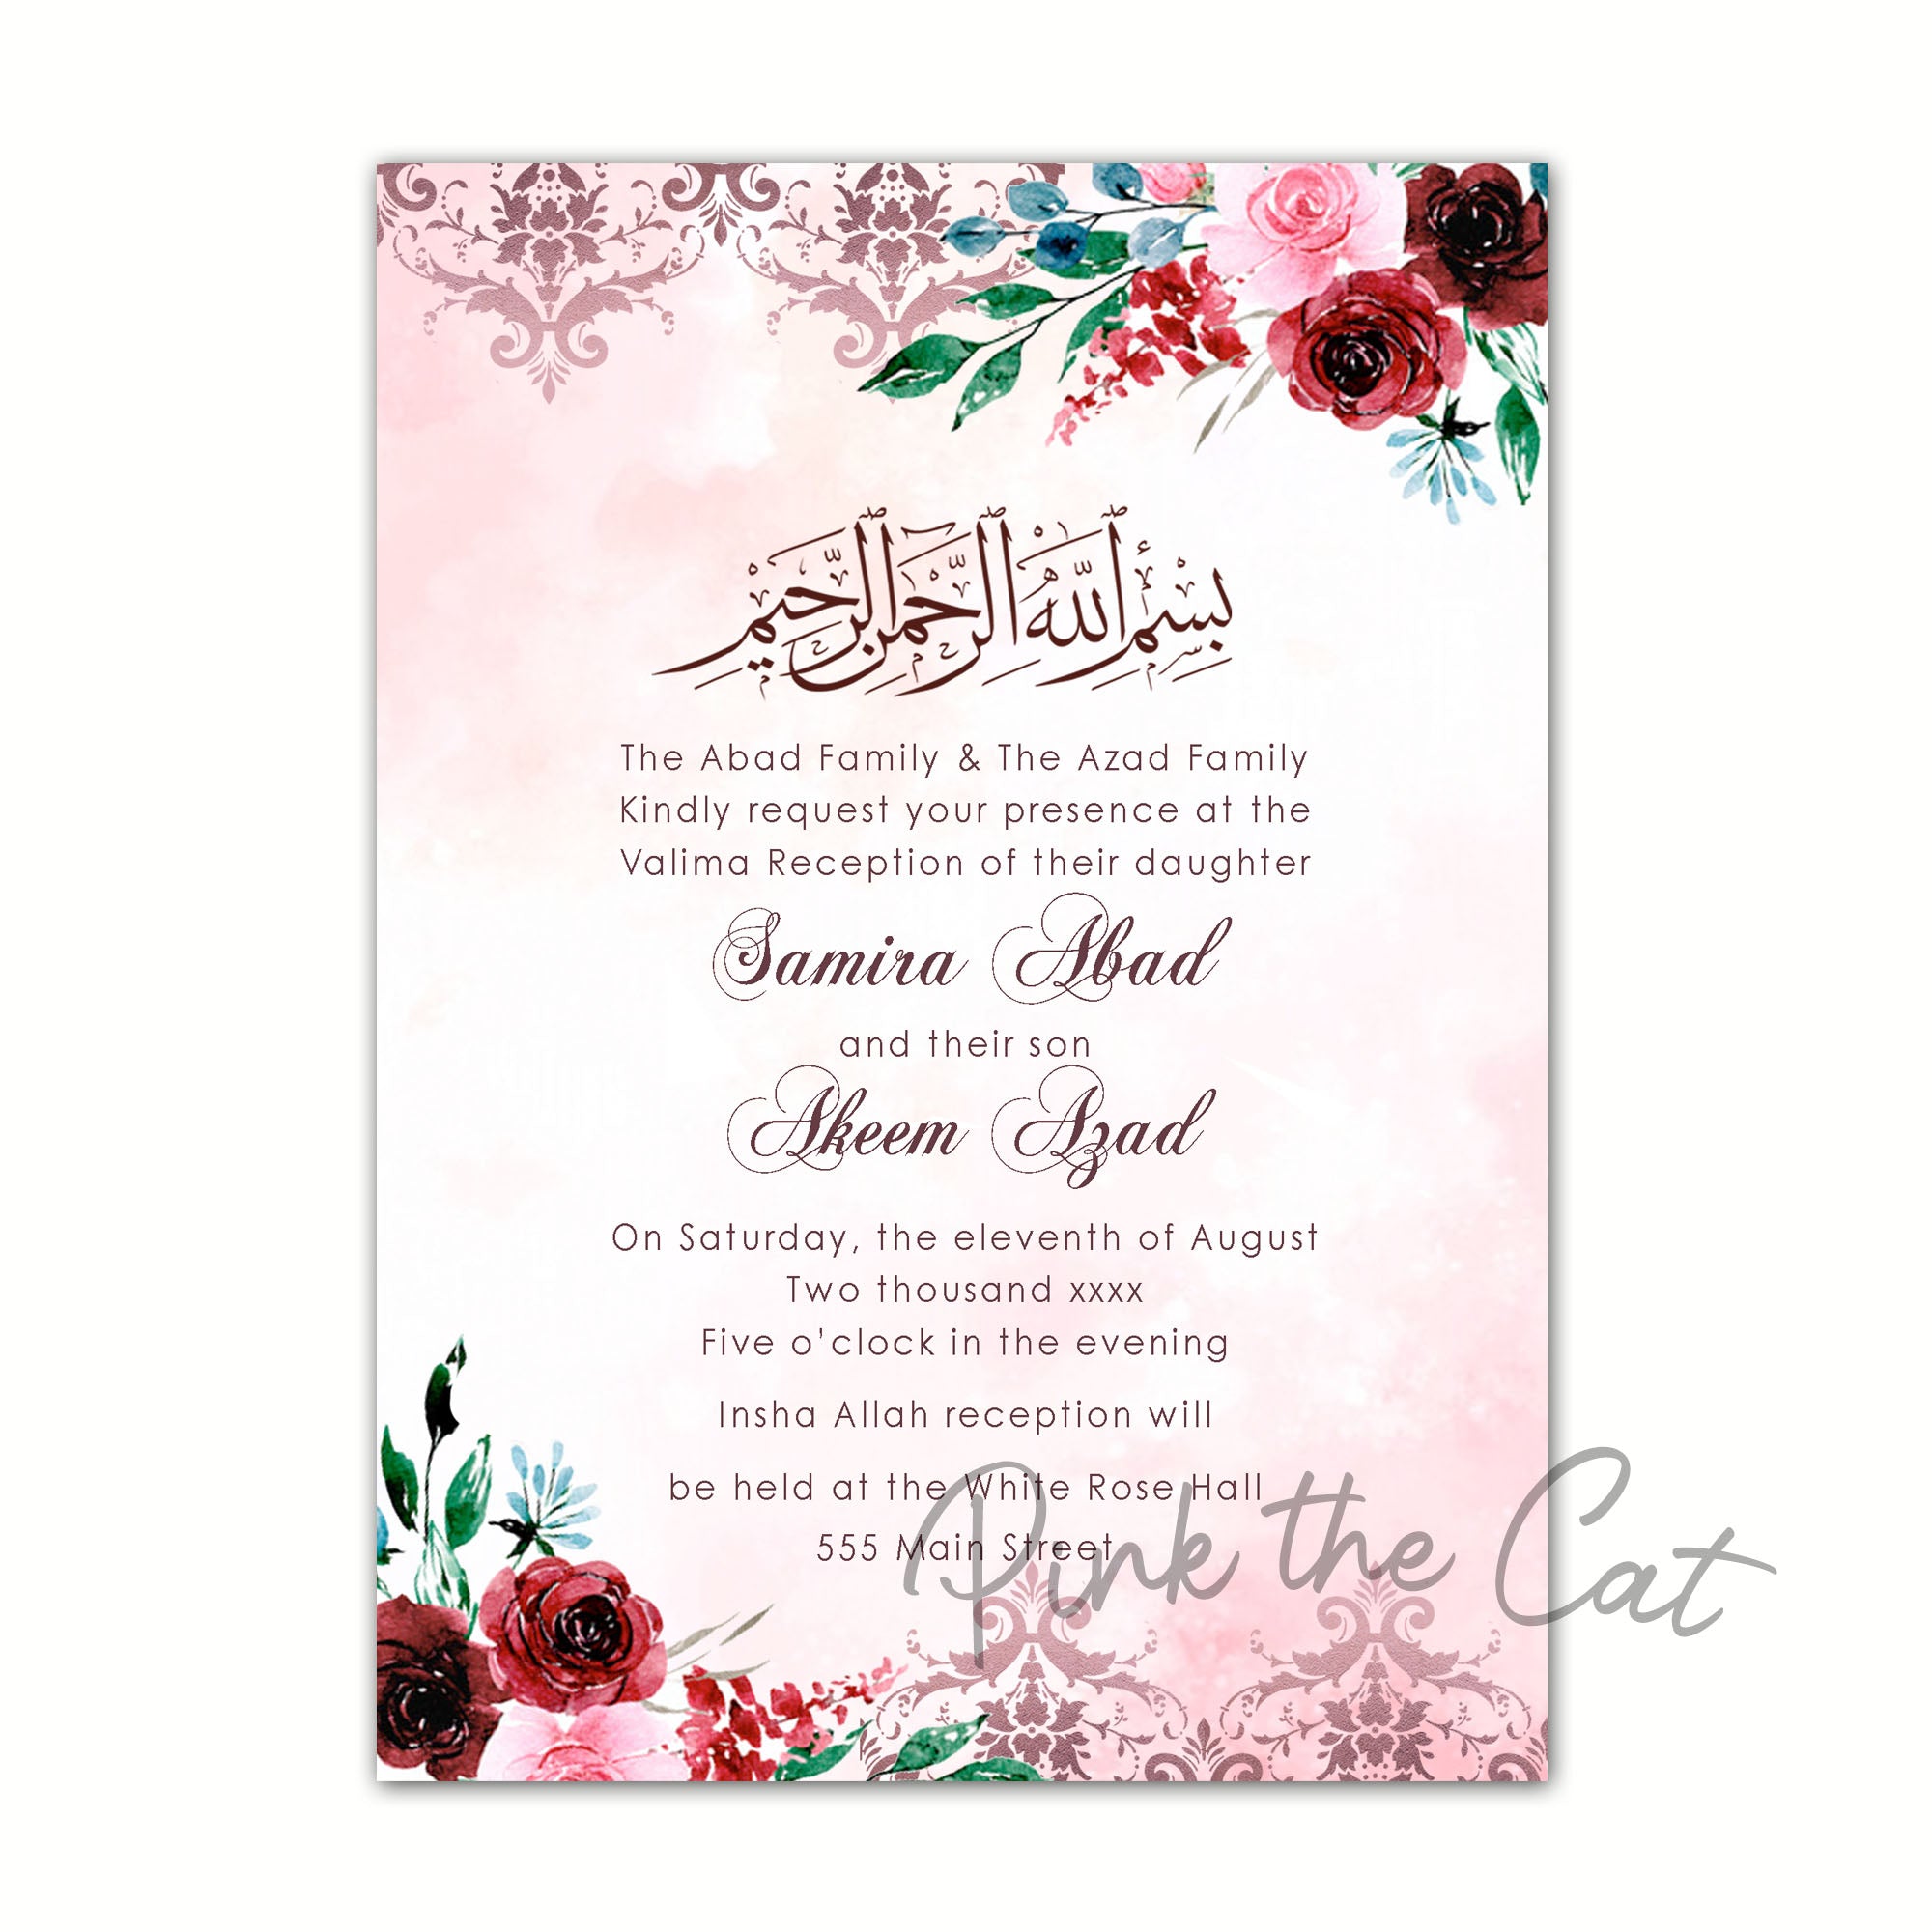 Walima nikah wedding invitations red roses